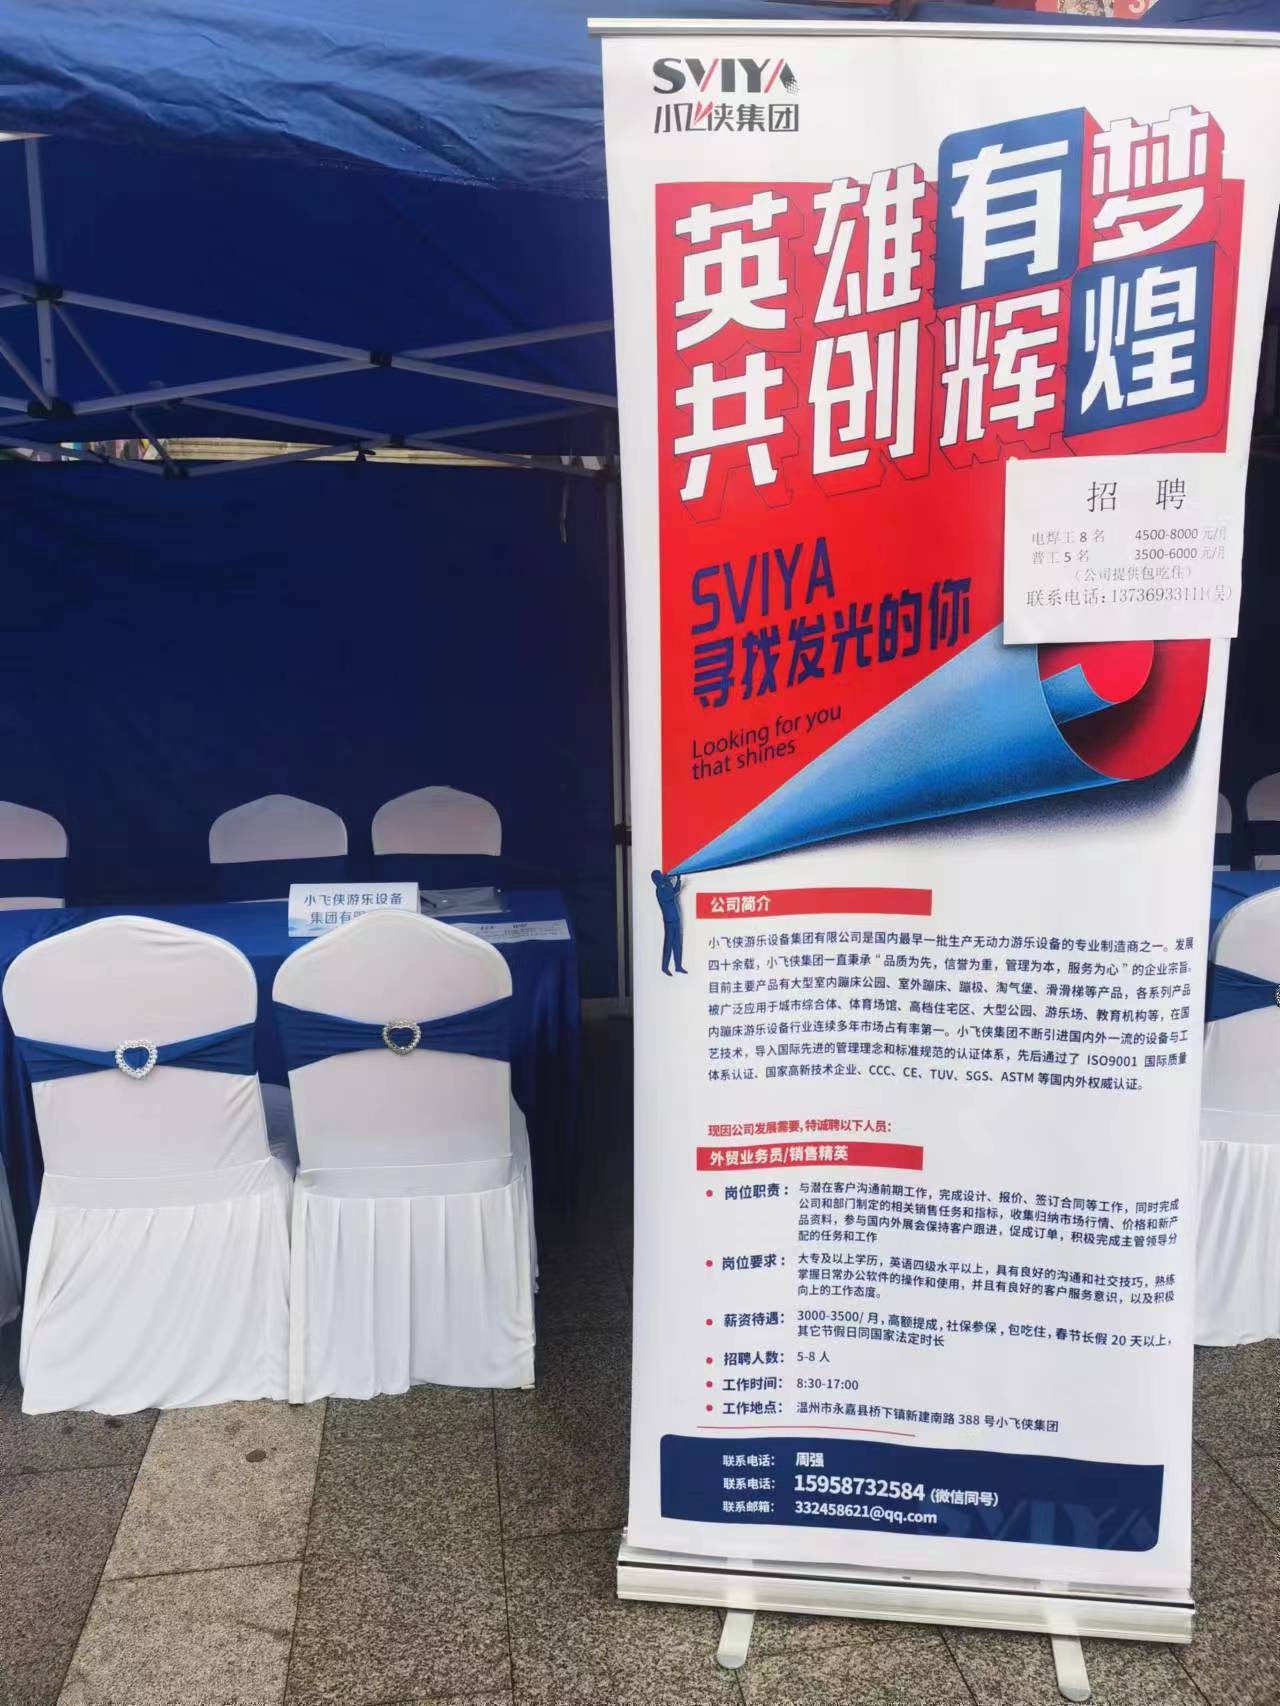 SVIYA Group At Job Fair Held By Qiaoxia Government